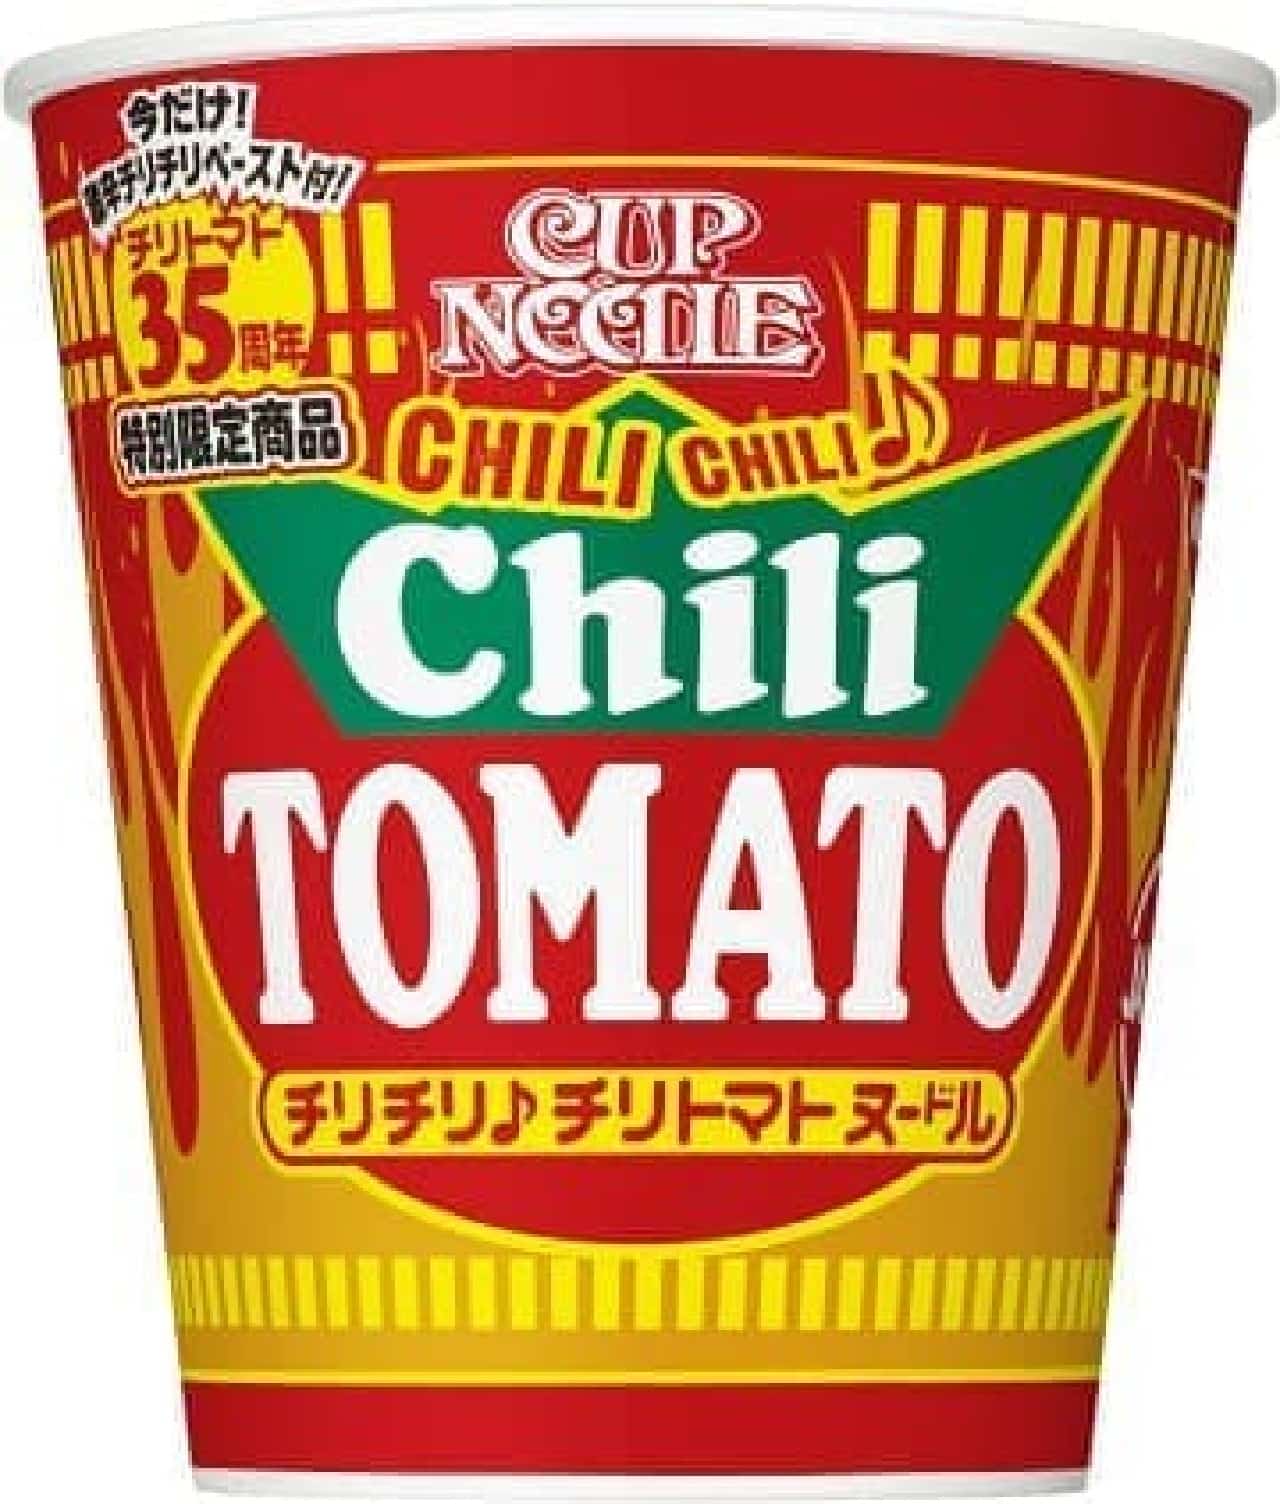 Nissin Foods "Cup Noodle Chili Chili ♪ Chili Tomato Noodle"